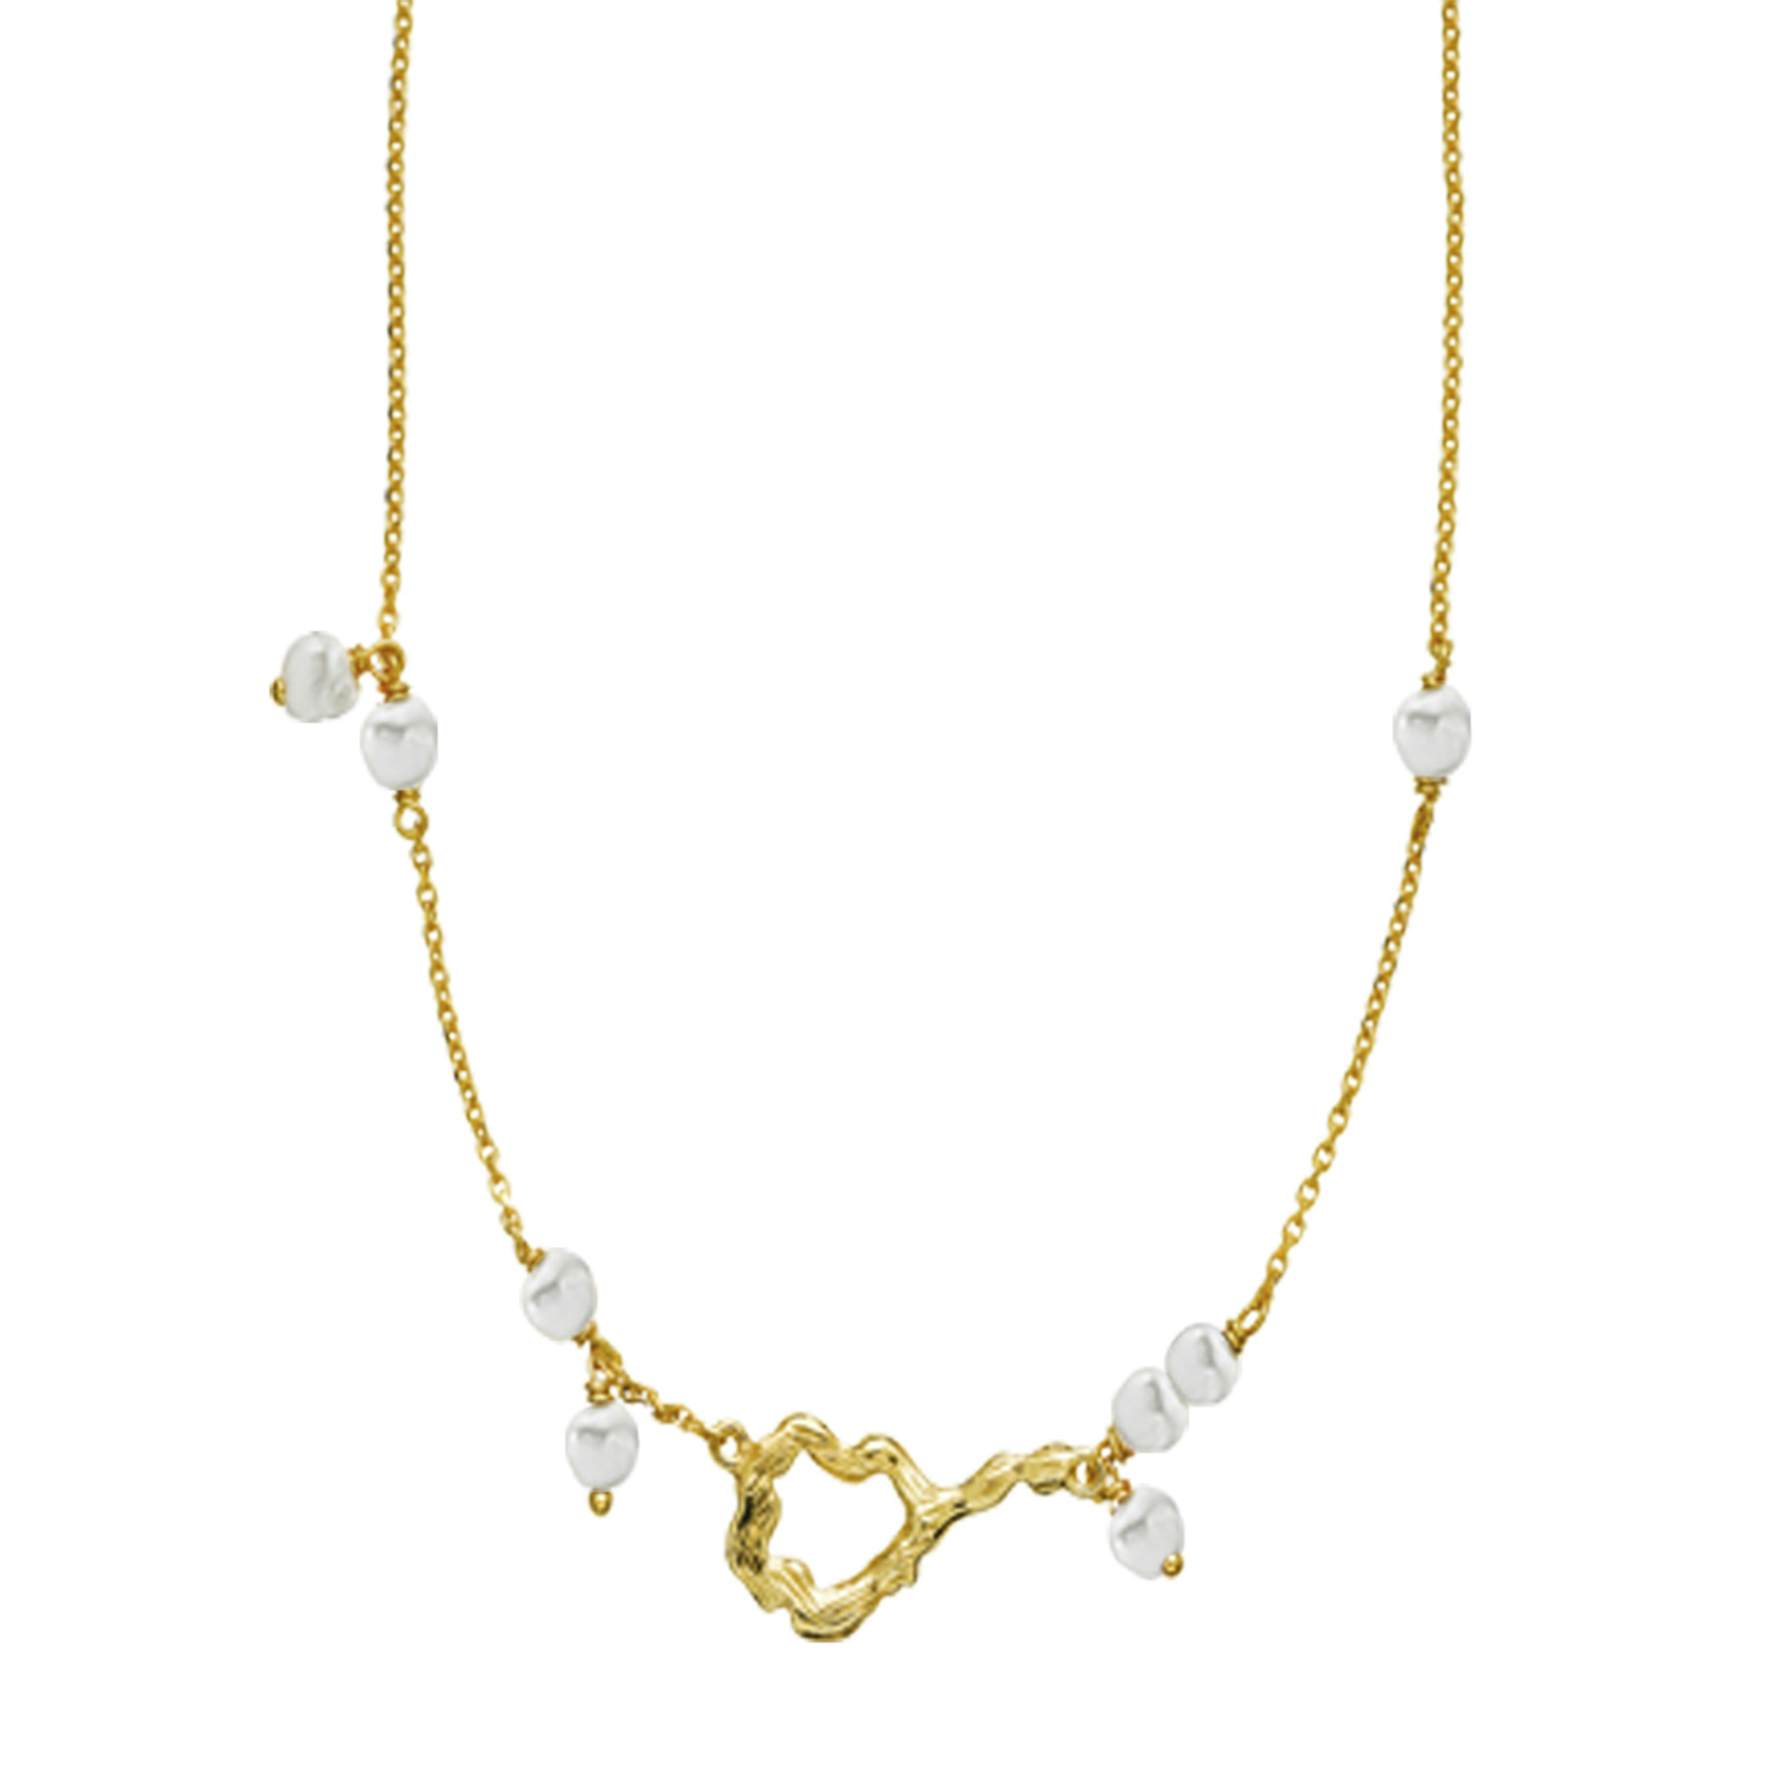 Lærke Bentsen By Sistie Necklace With Pearls von Sistie in Vergoldet-Silber Sterling 925|Freshwater Pearl